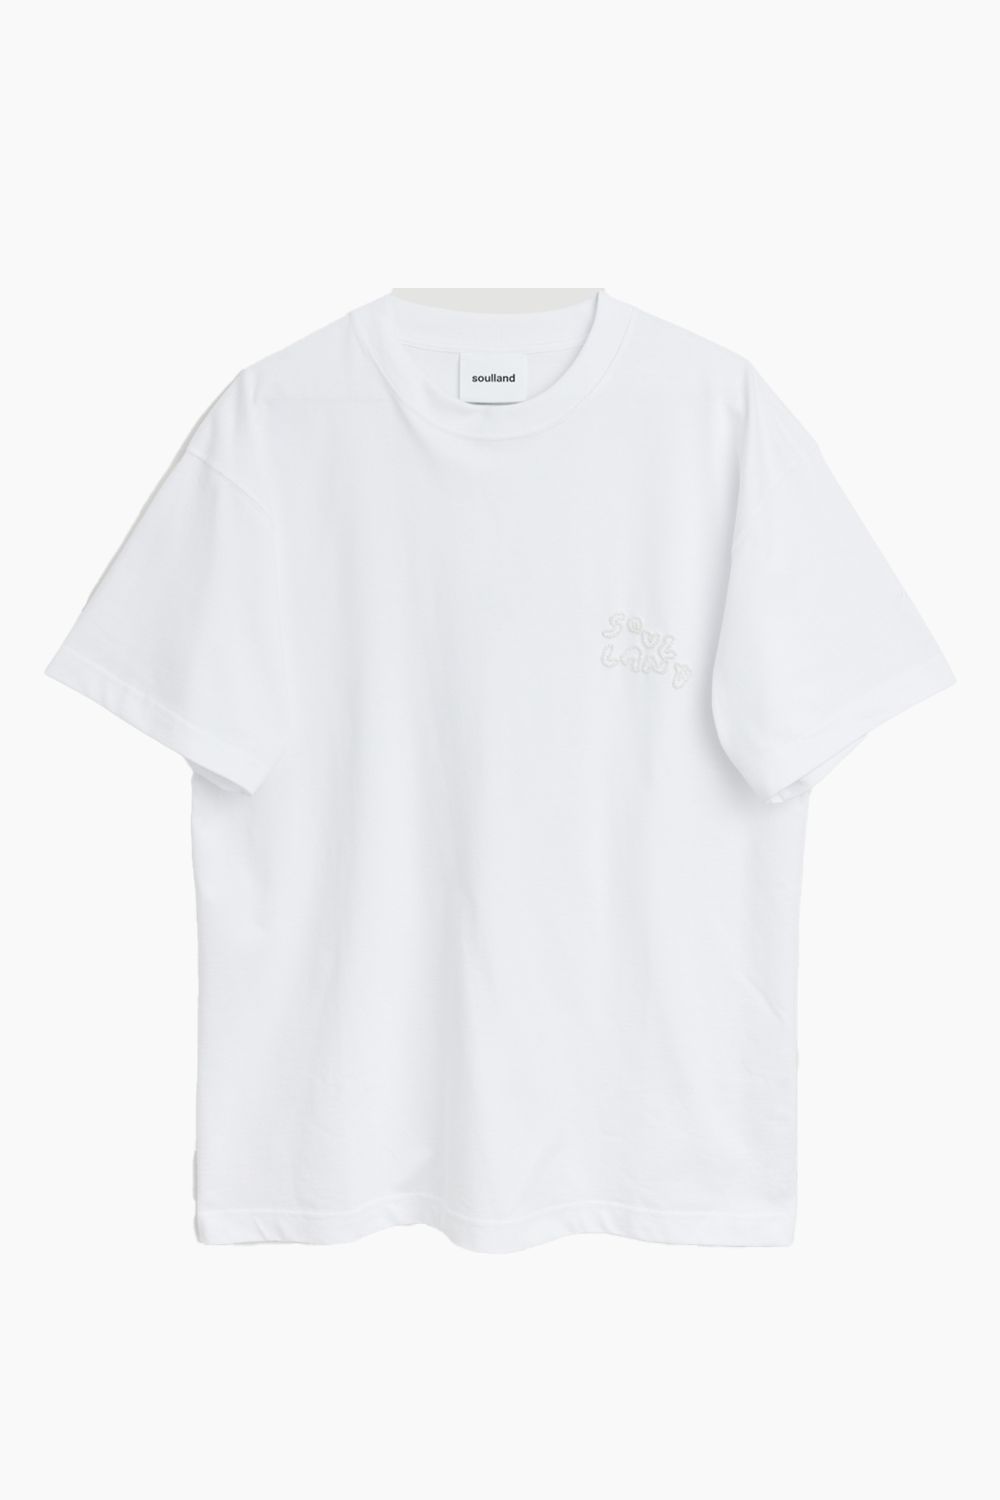 Se Kai T-shirt Beaded Logo - White - Soulland - Hvid XS/S hos QNTS.dk